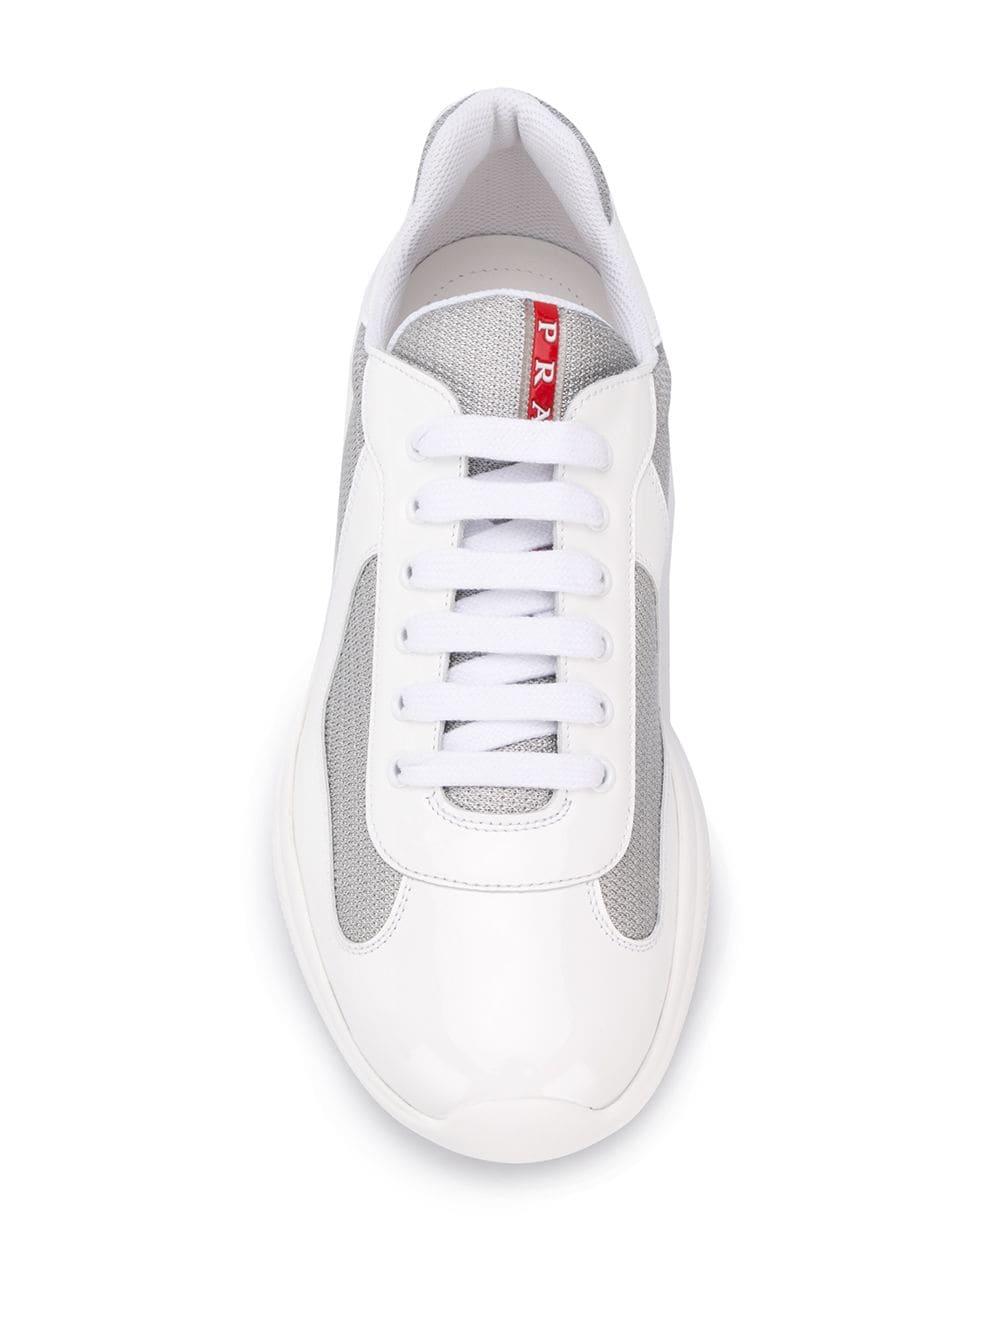 Prada America's Cup Sneakers in White for Men - Lyst